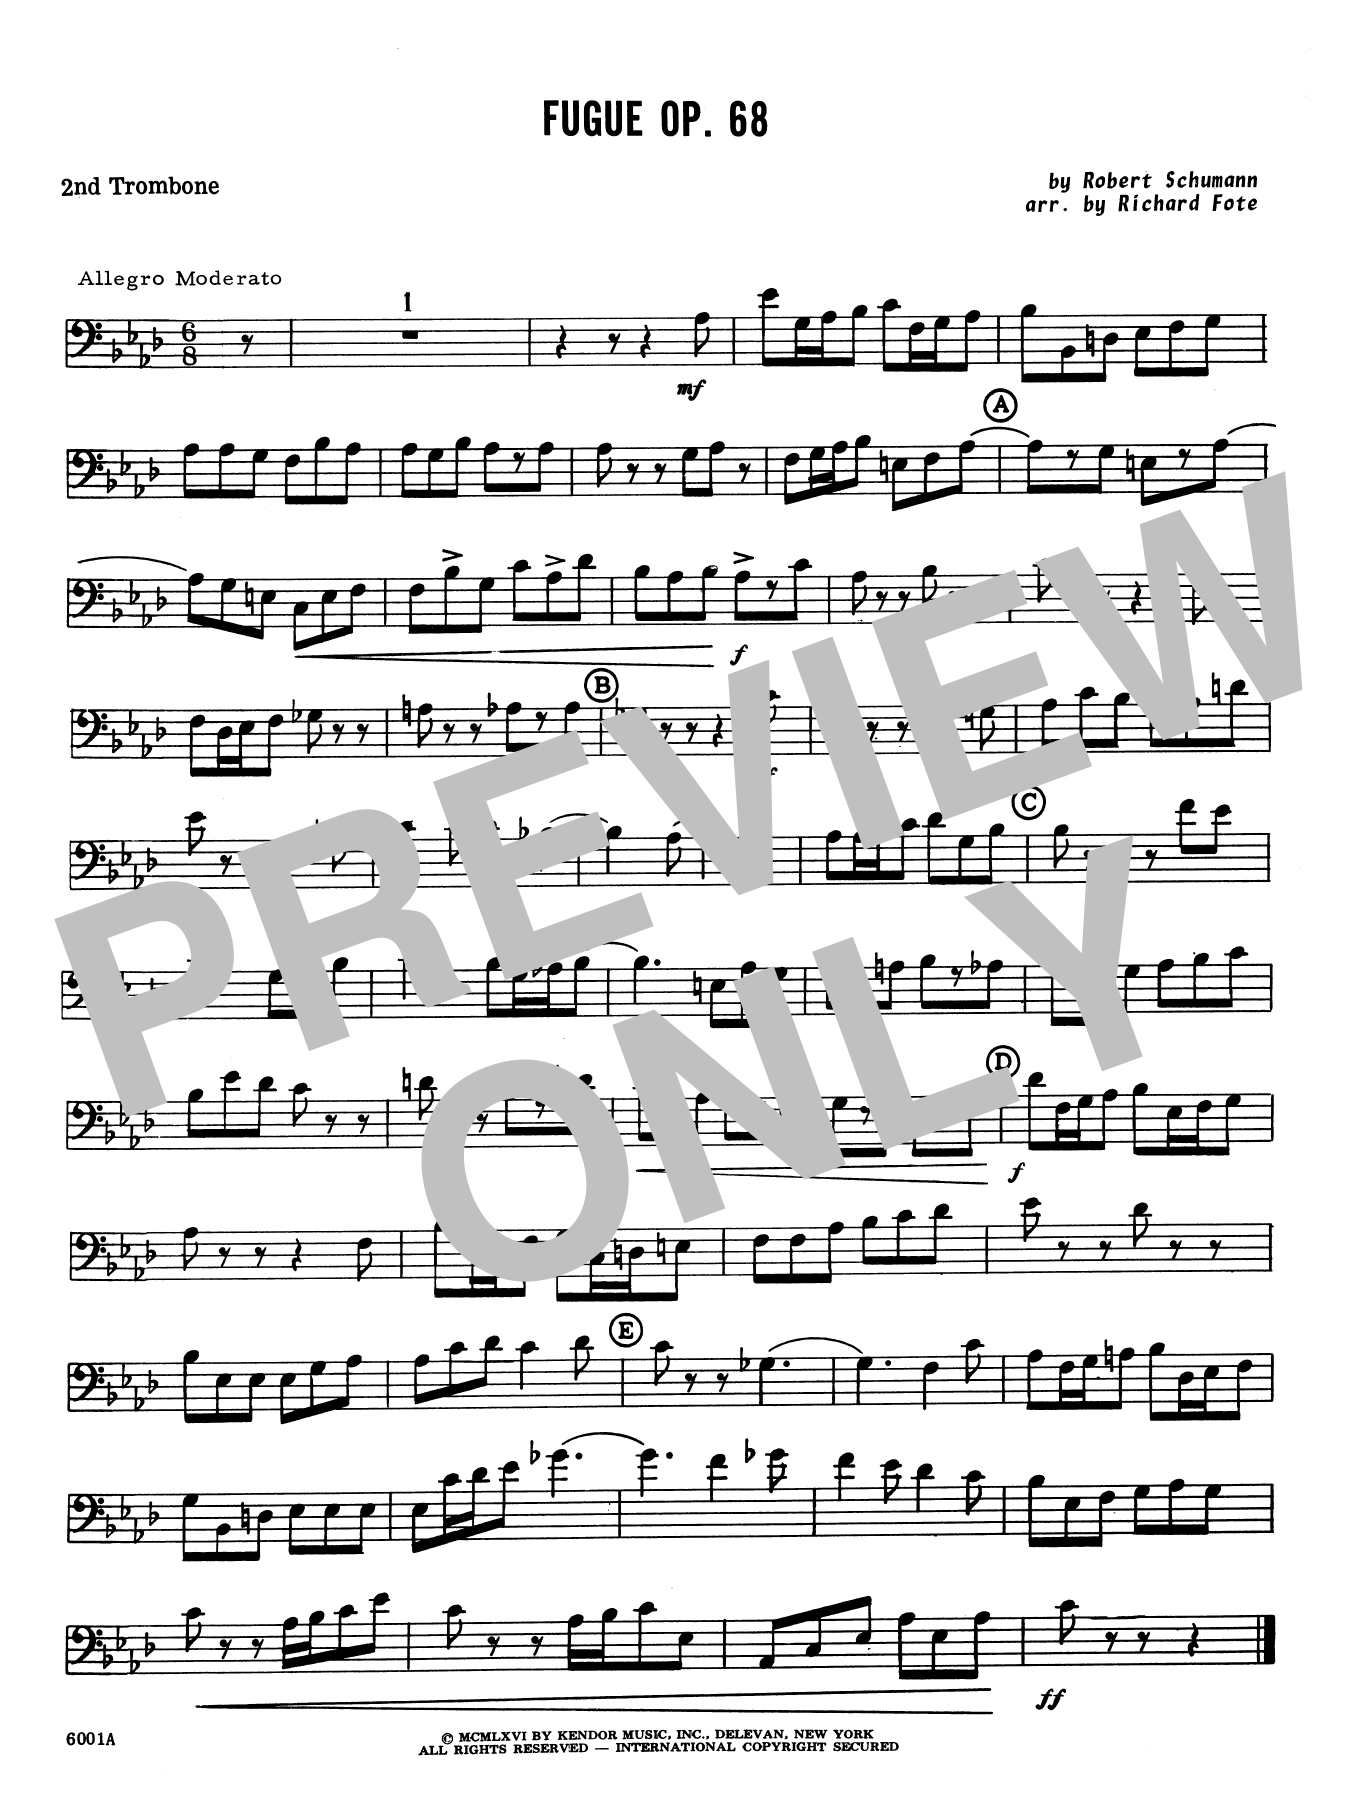 Download Richard Fote Fugue/Opus 68 - 2nd Trombone Sheet Music